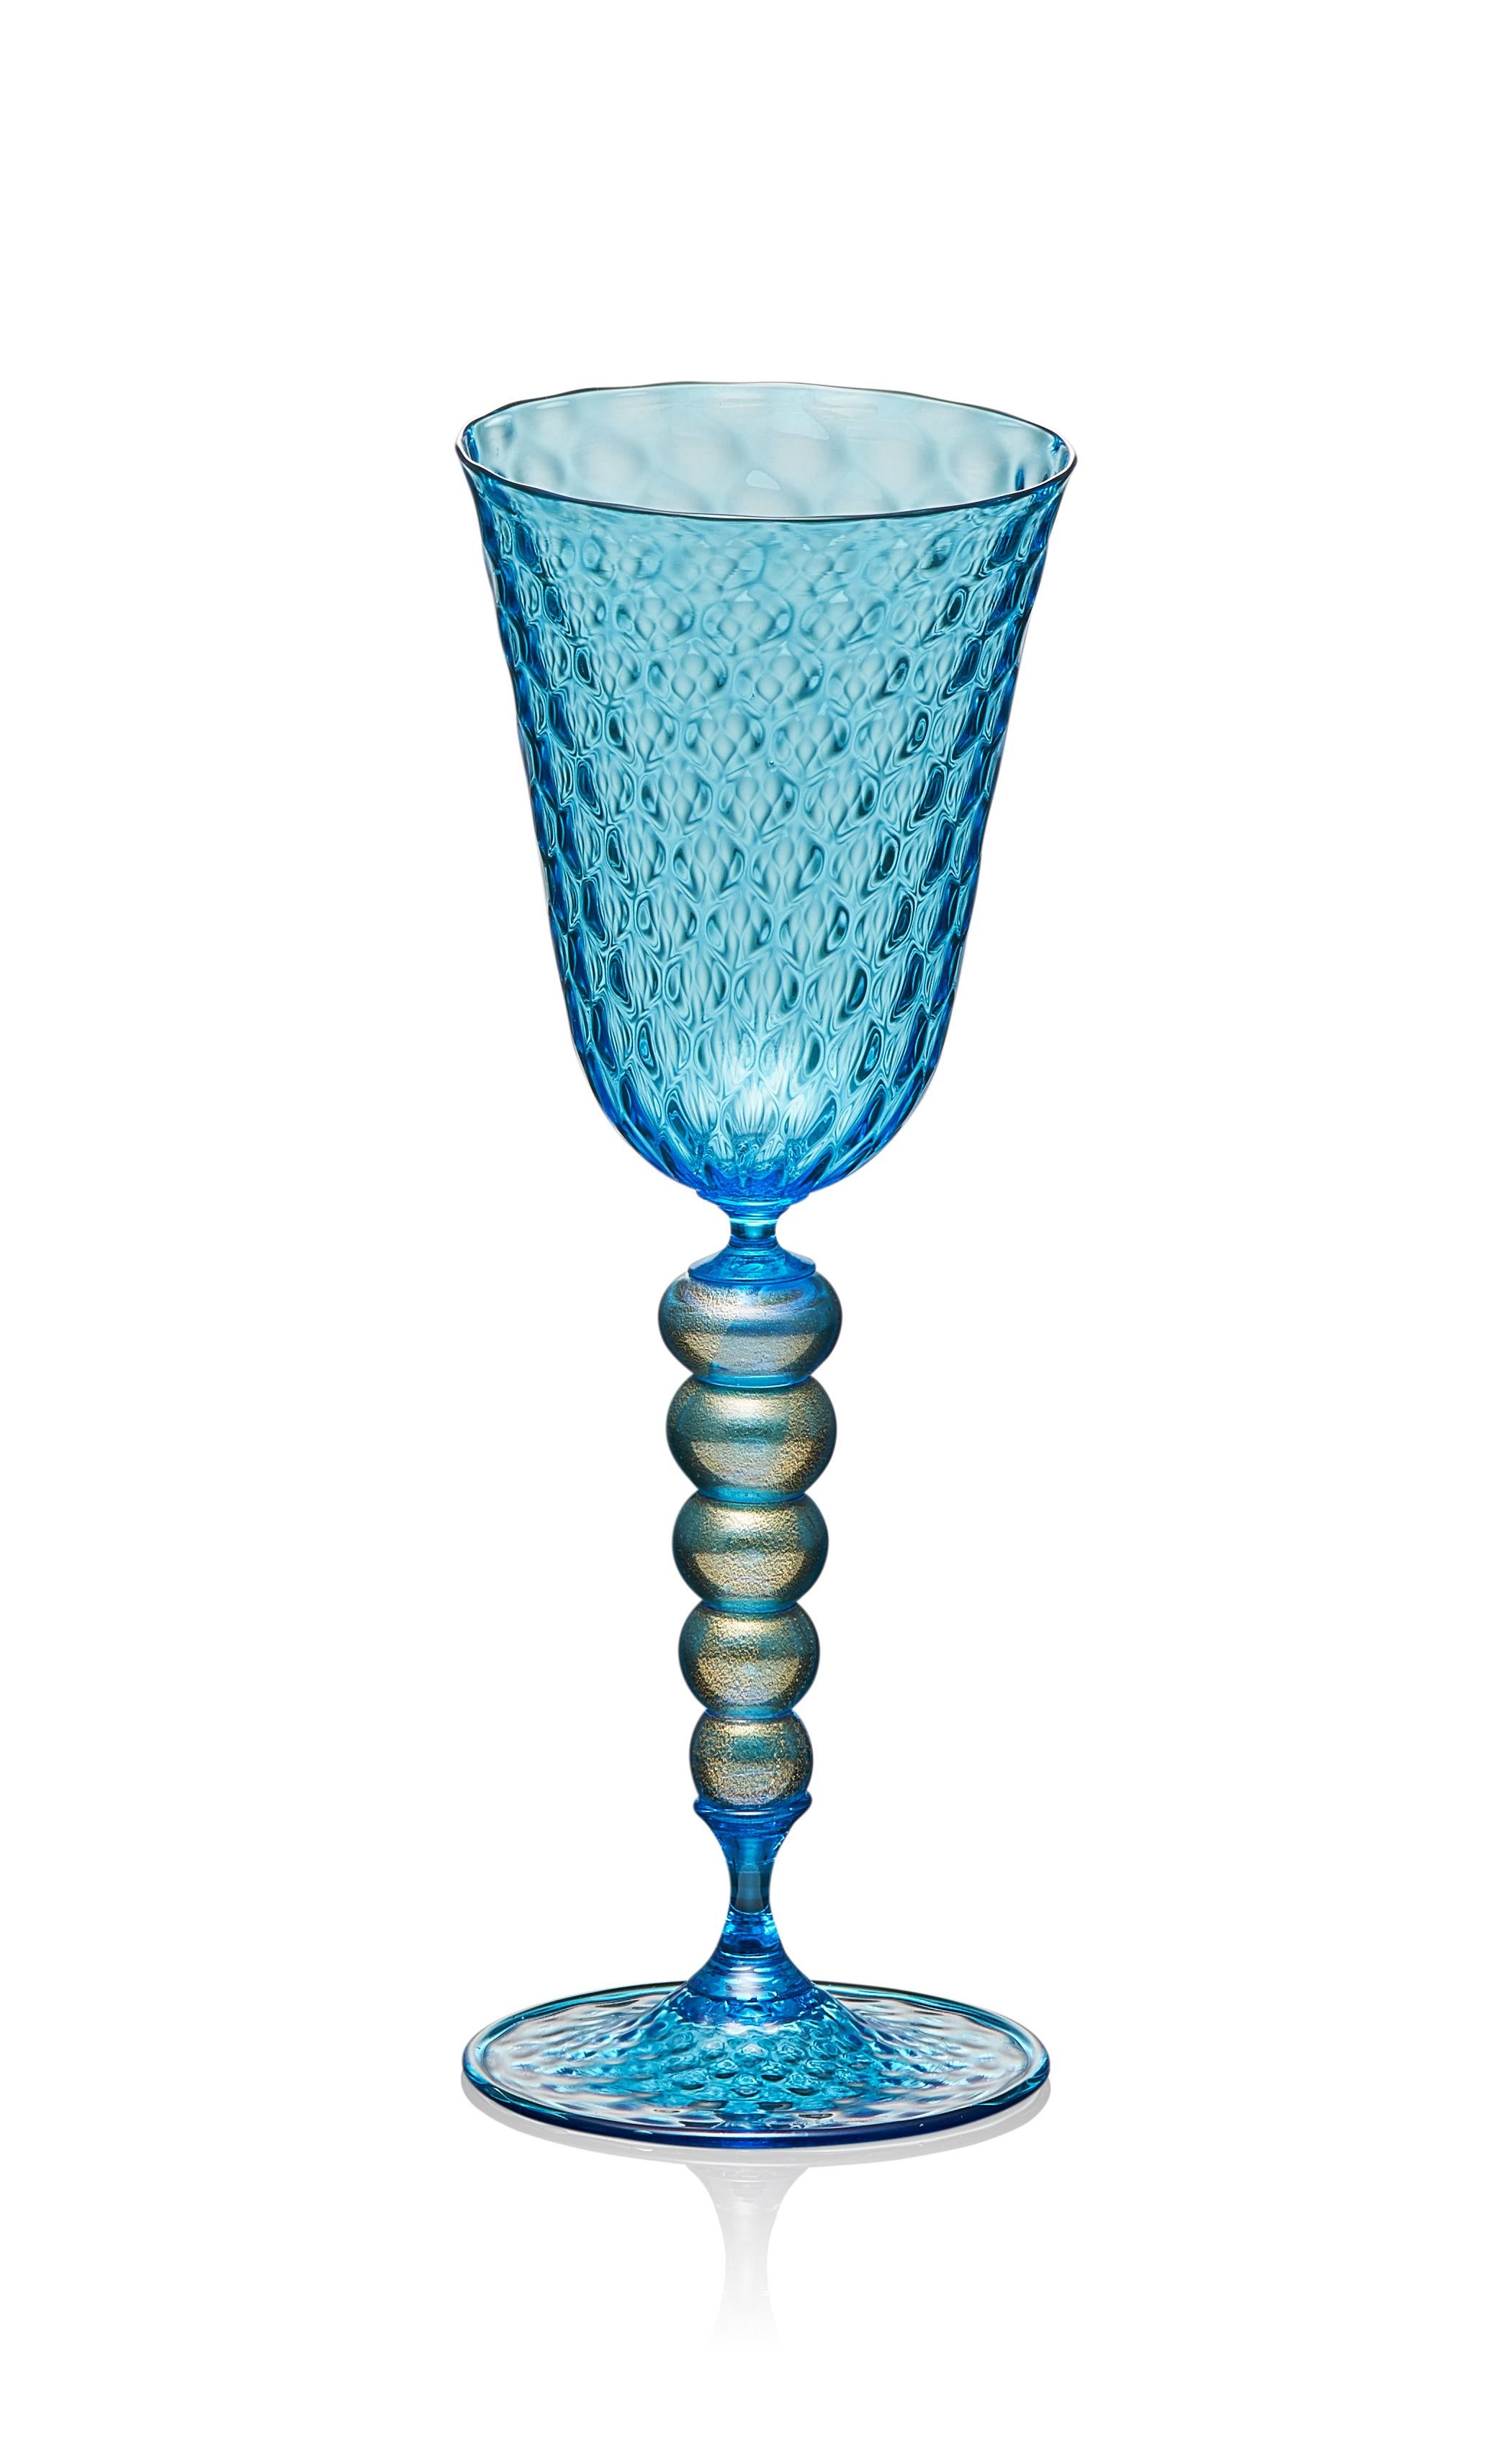 Copper Blue Goblet - Art by Michael Schunke